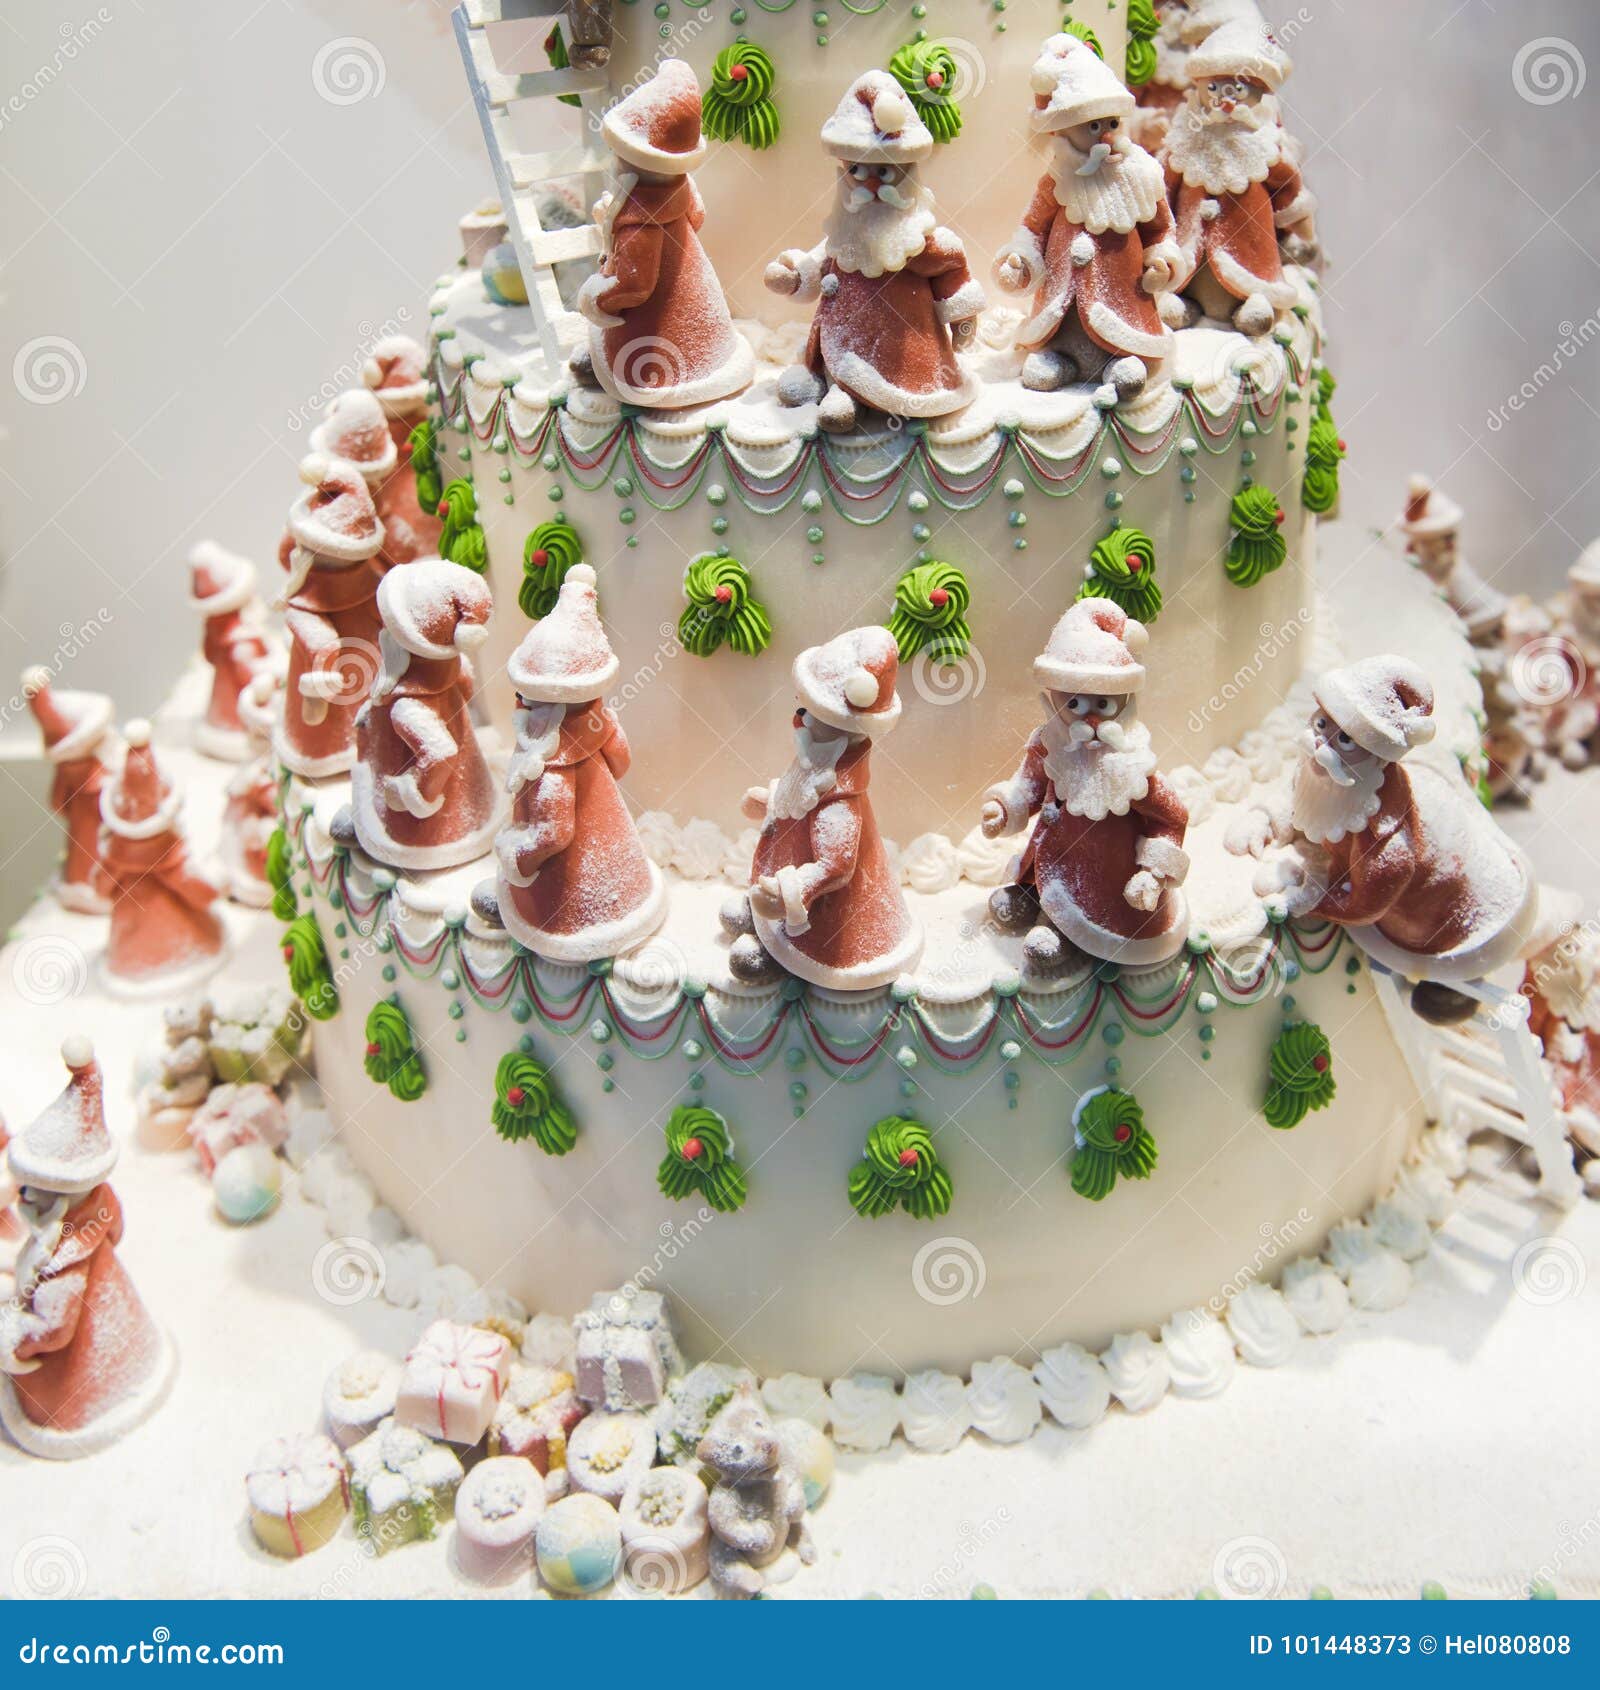 christmas cake with lots of santas